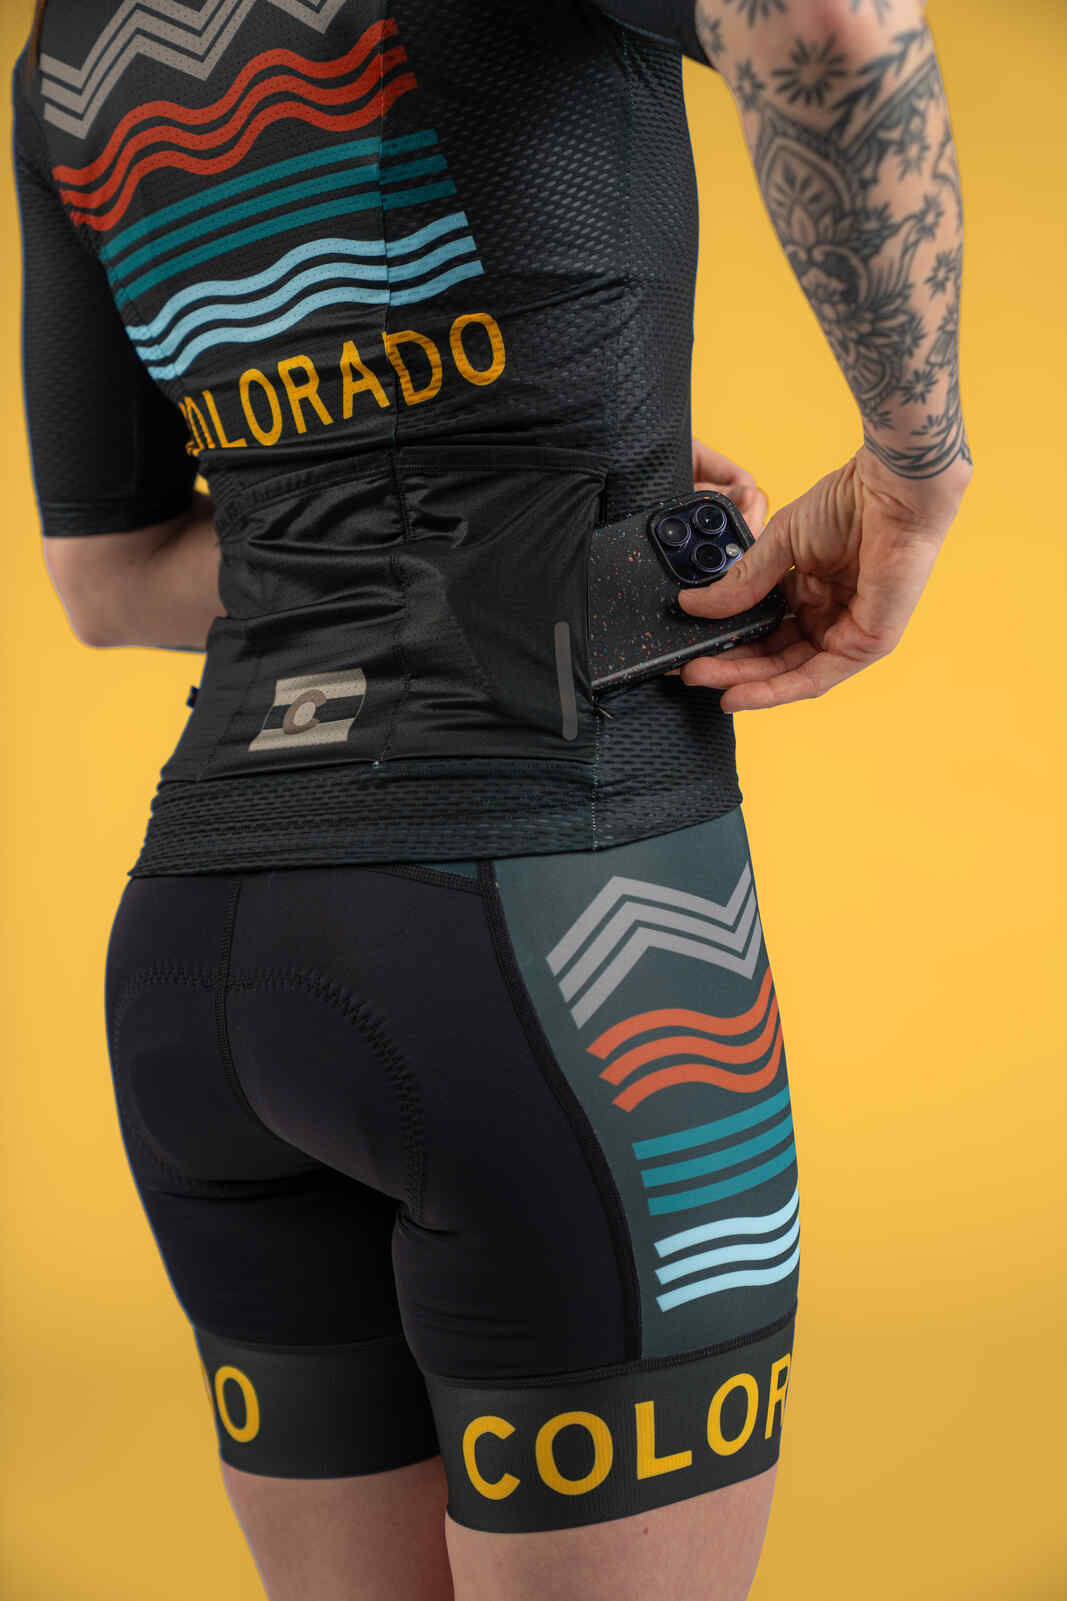 Women's Navy Blue Colorado Mesh Cycling Jersey - Zippered Valuables Pocket